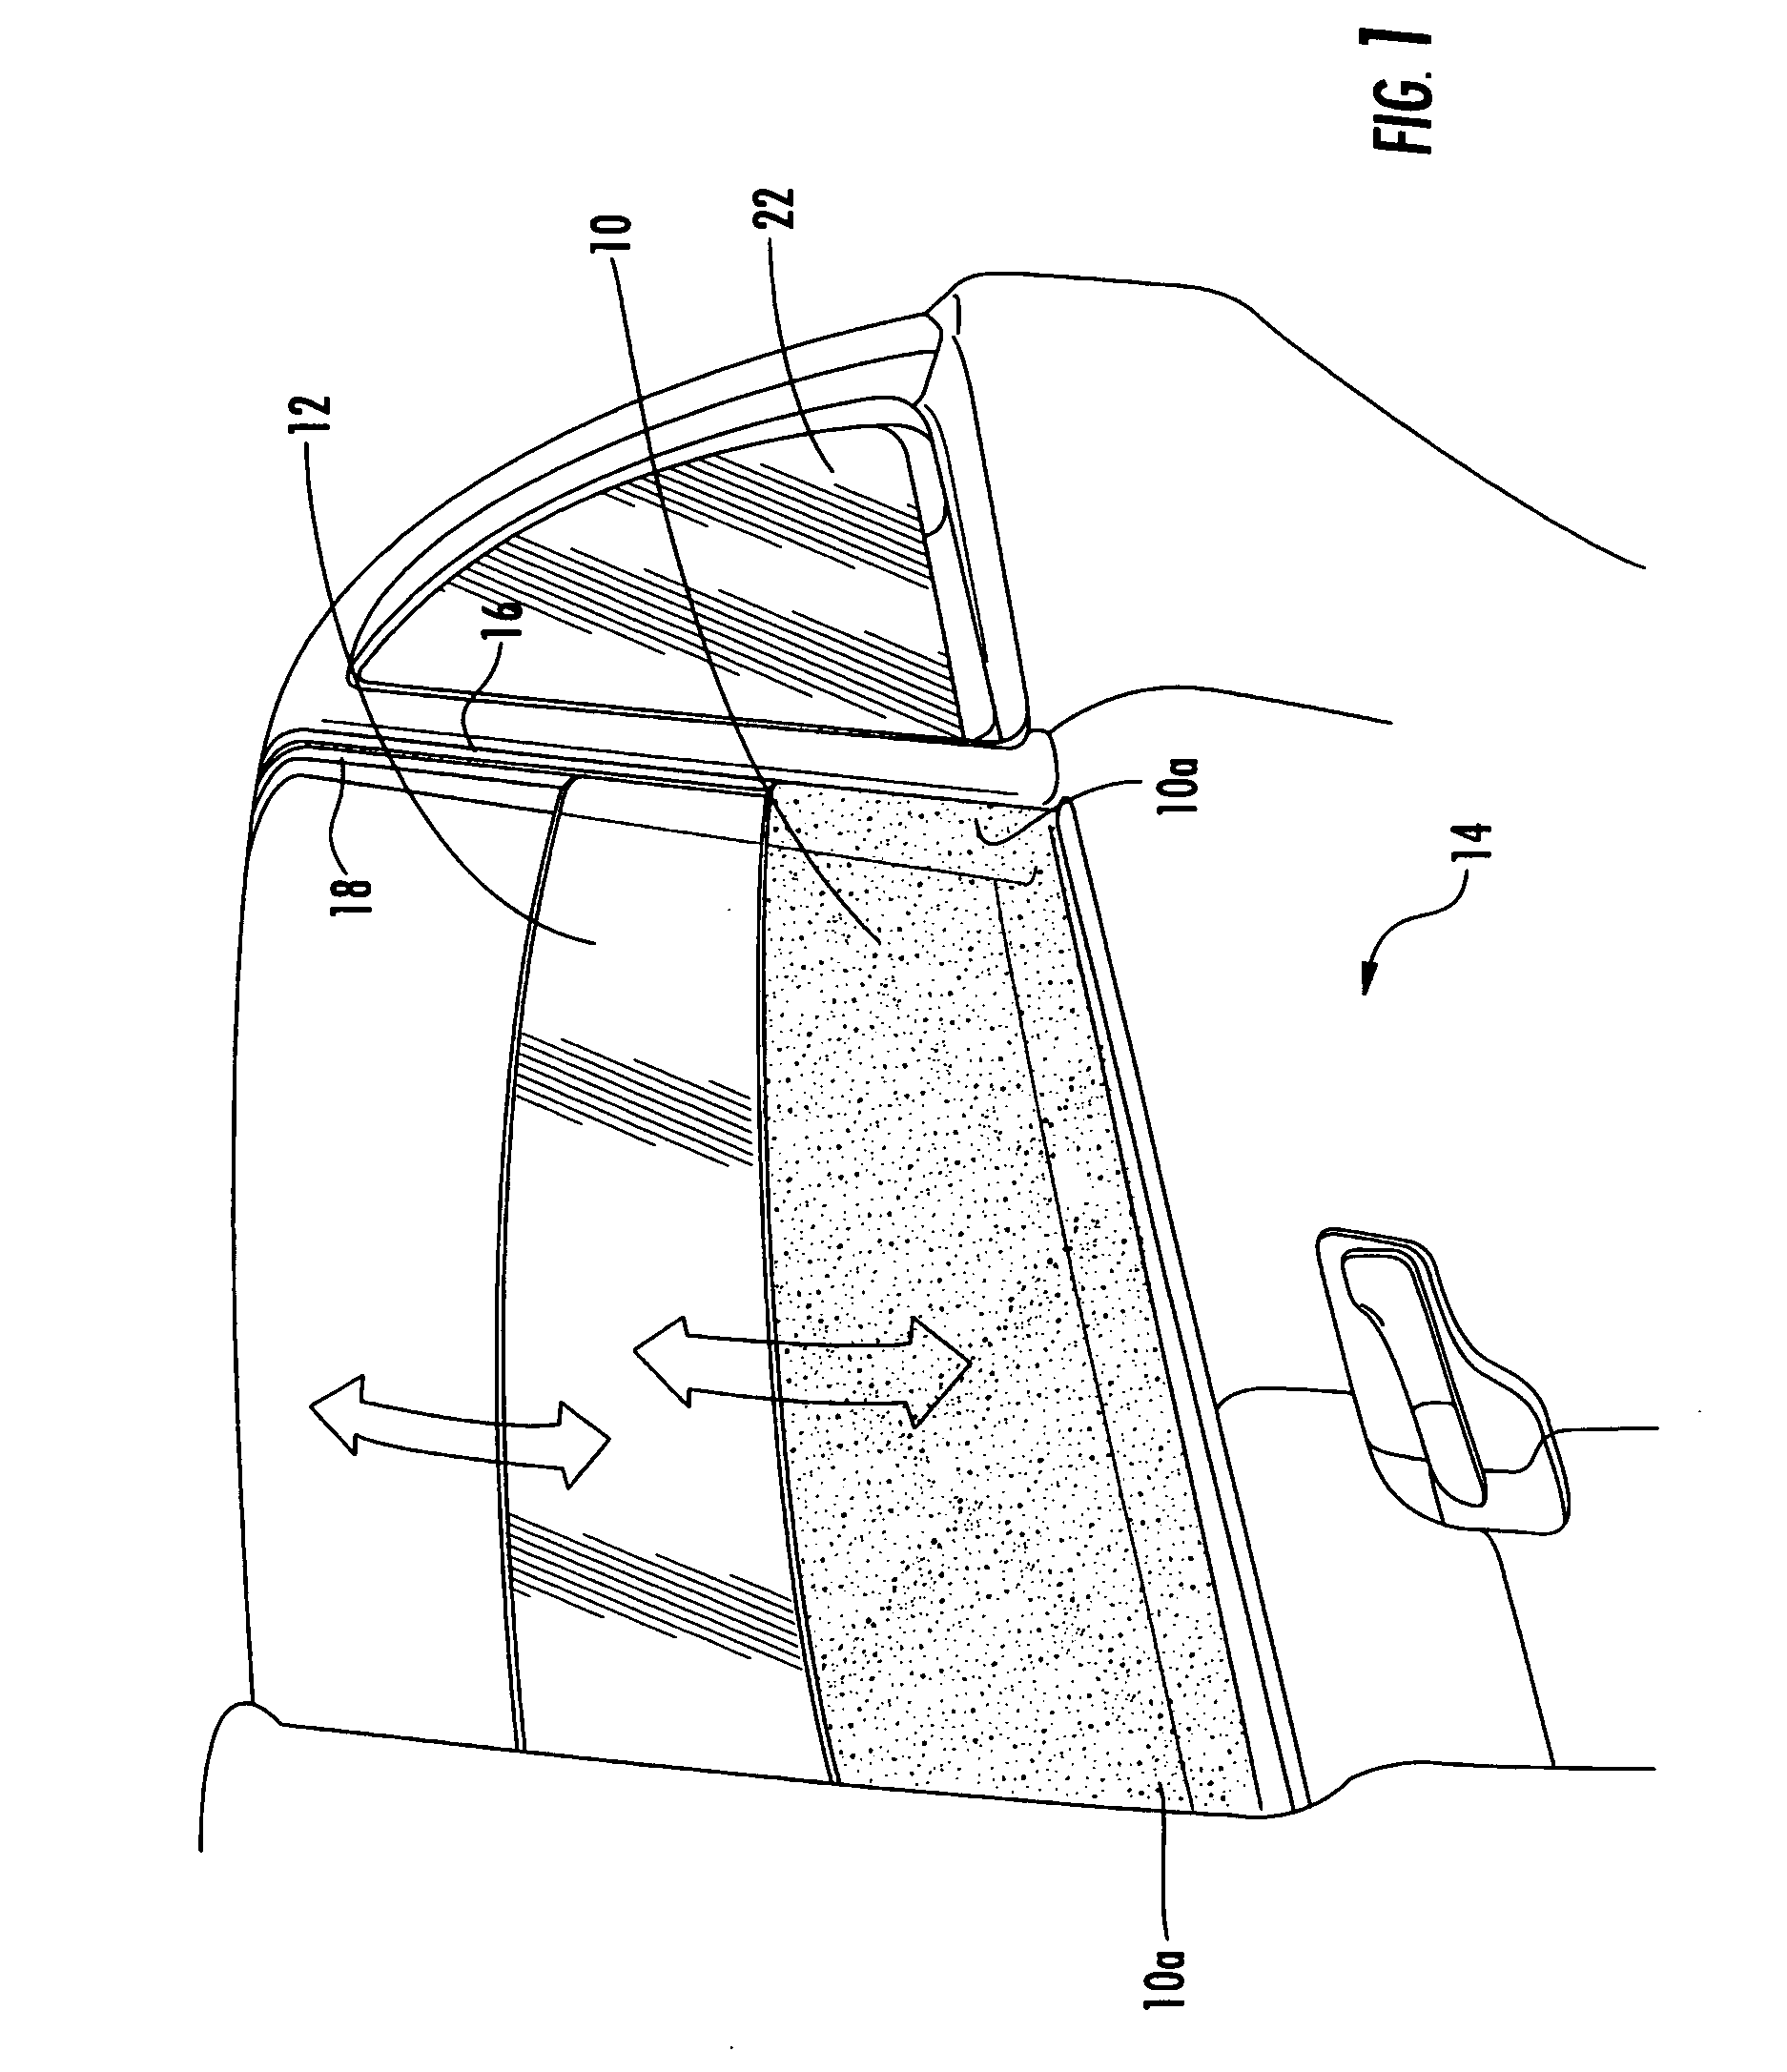 Window and sun shade module for vehicle